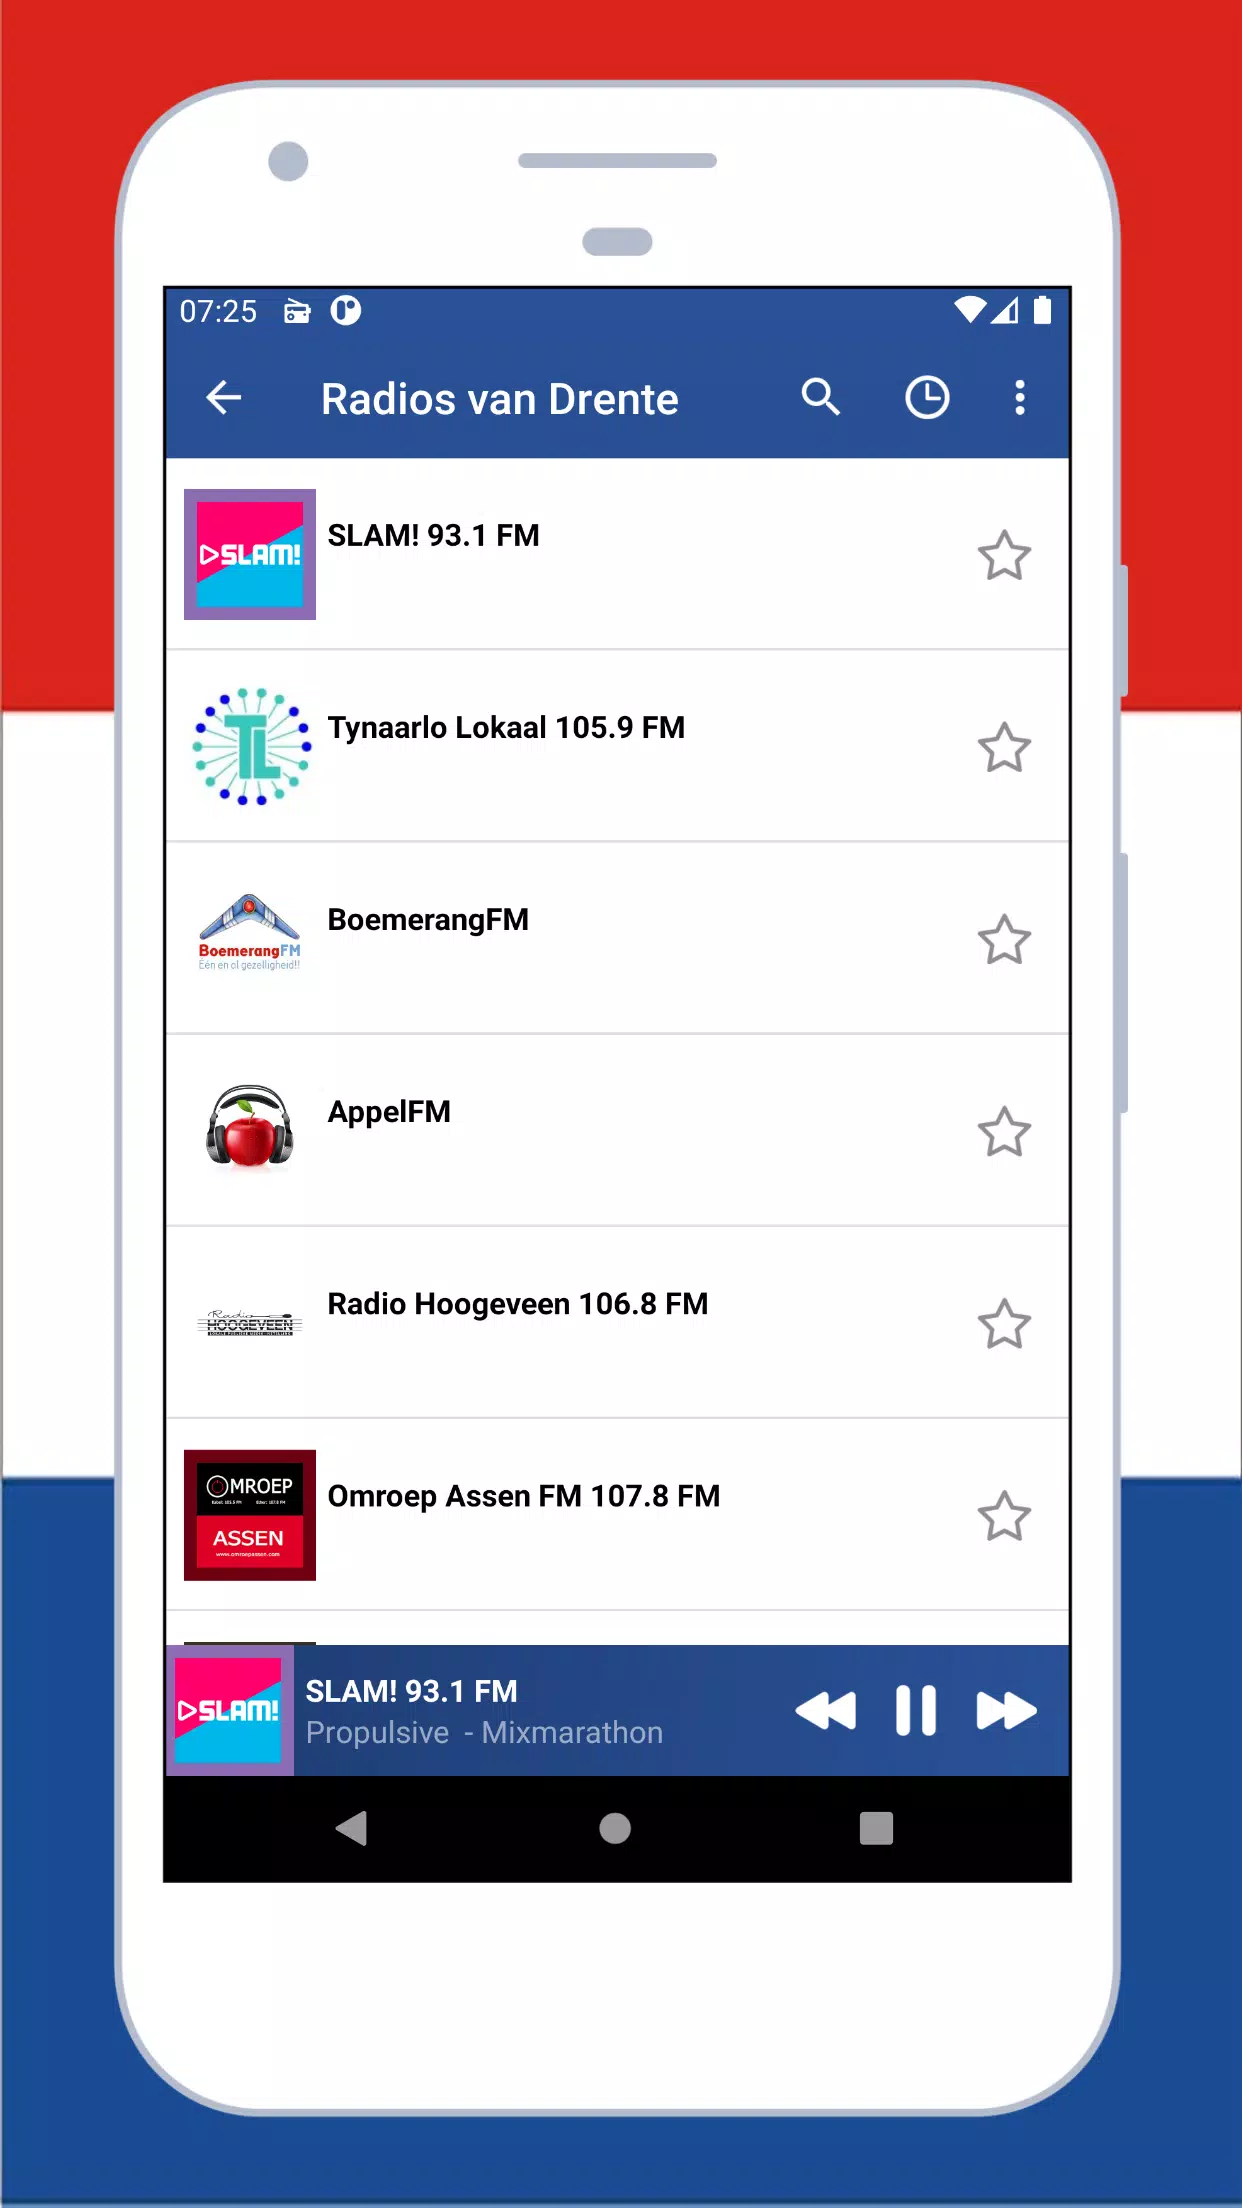 Radio Netherlands FM: Radio NL APK for Android Download